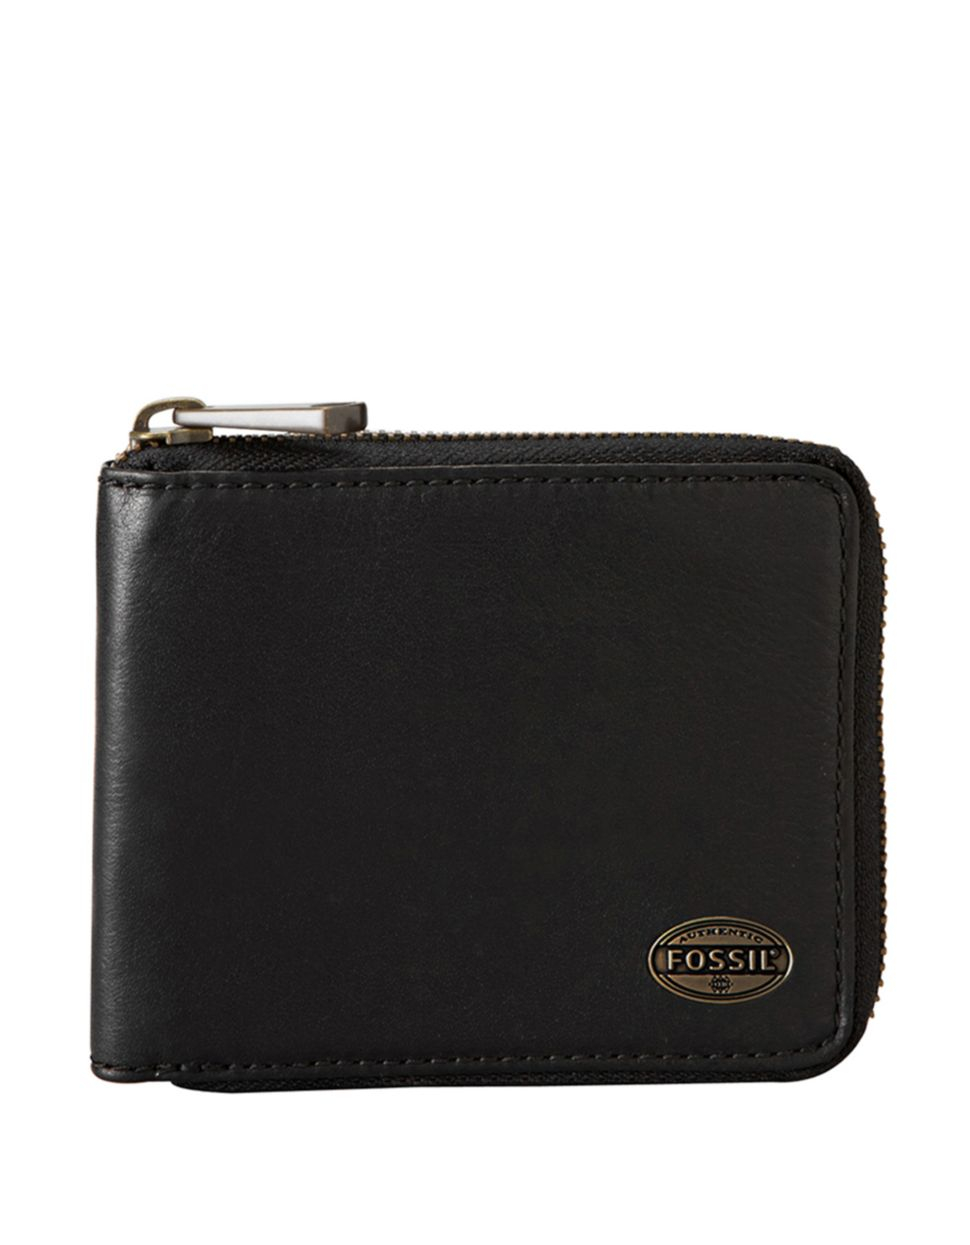 Fossil Estate Leather Zip-Around Bifold Wallet in Black for Men | Lyst